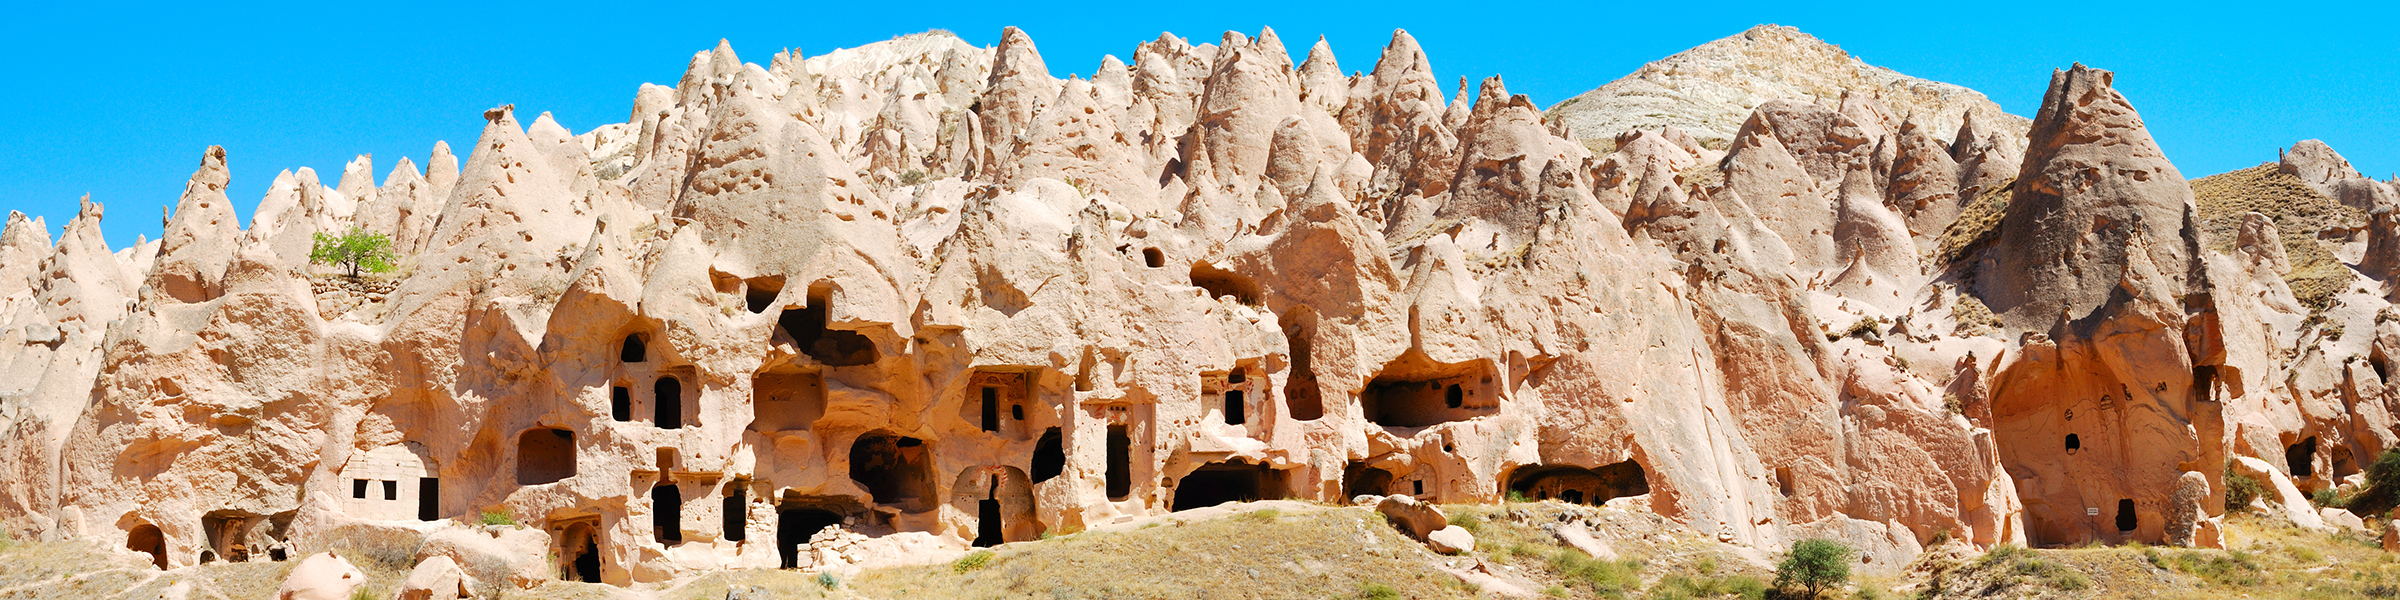 Turkey Cappadocia Göreme National Park